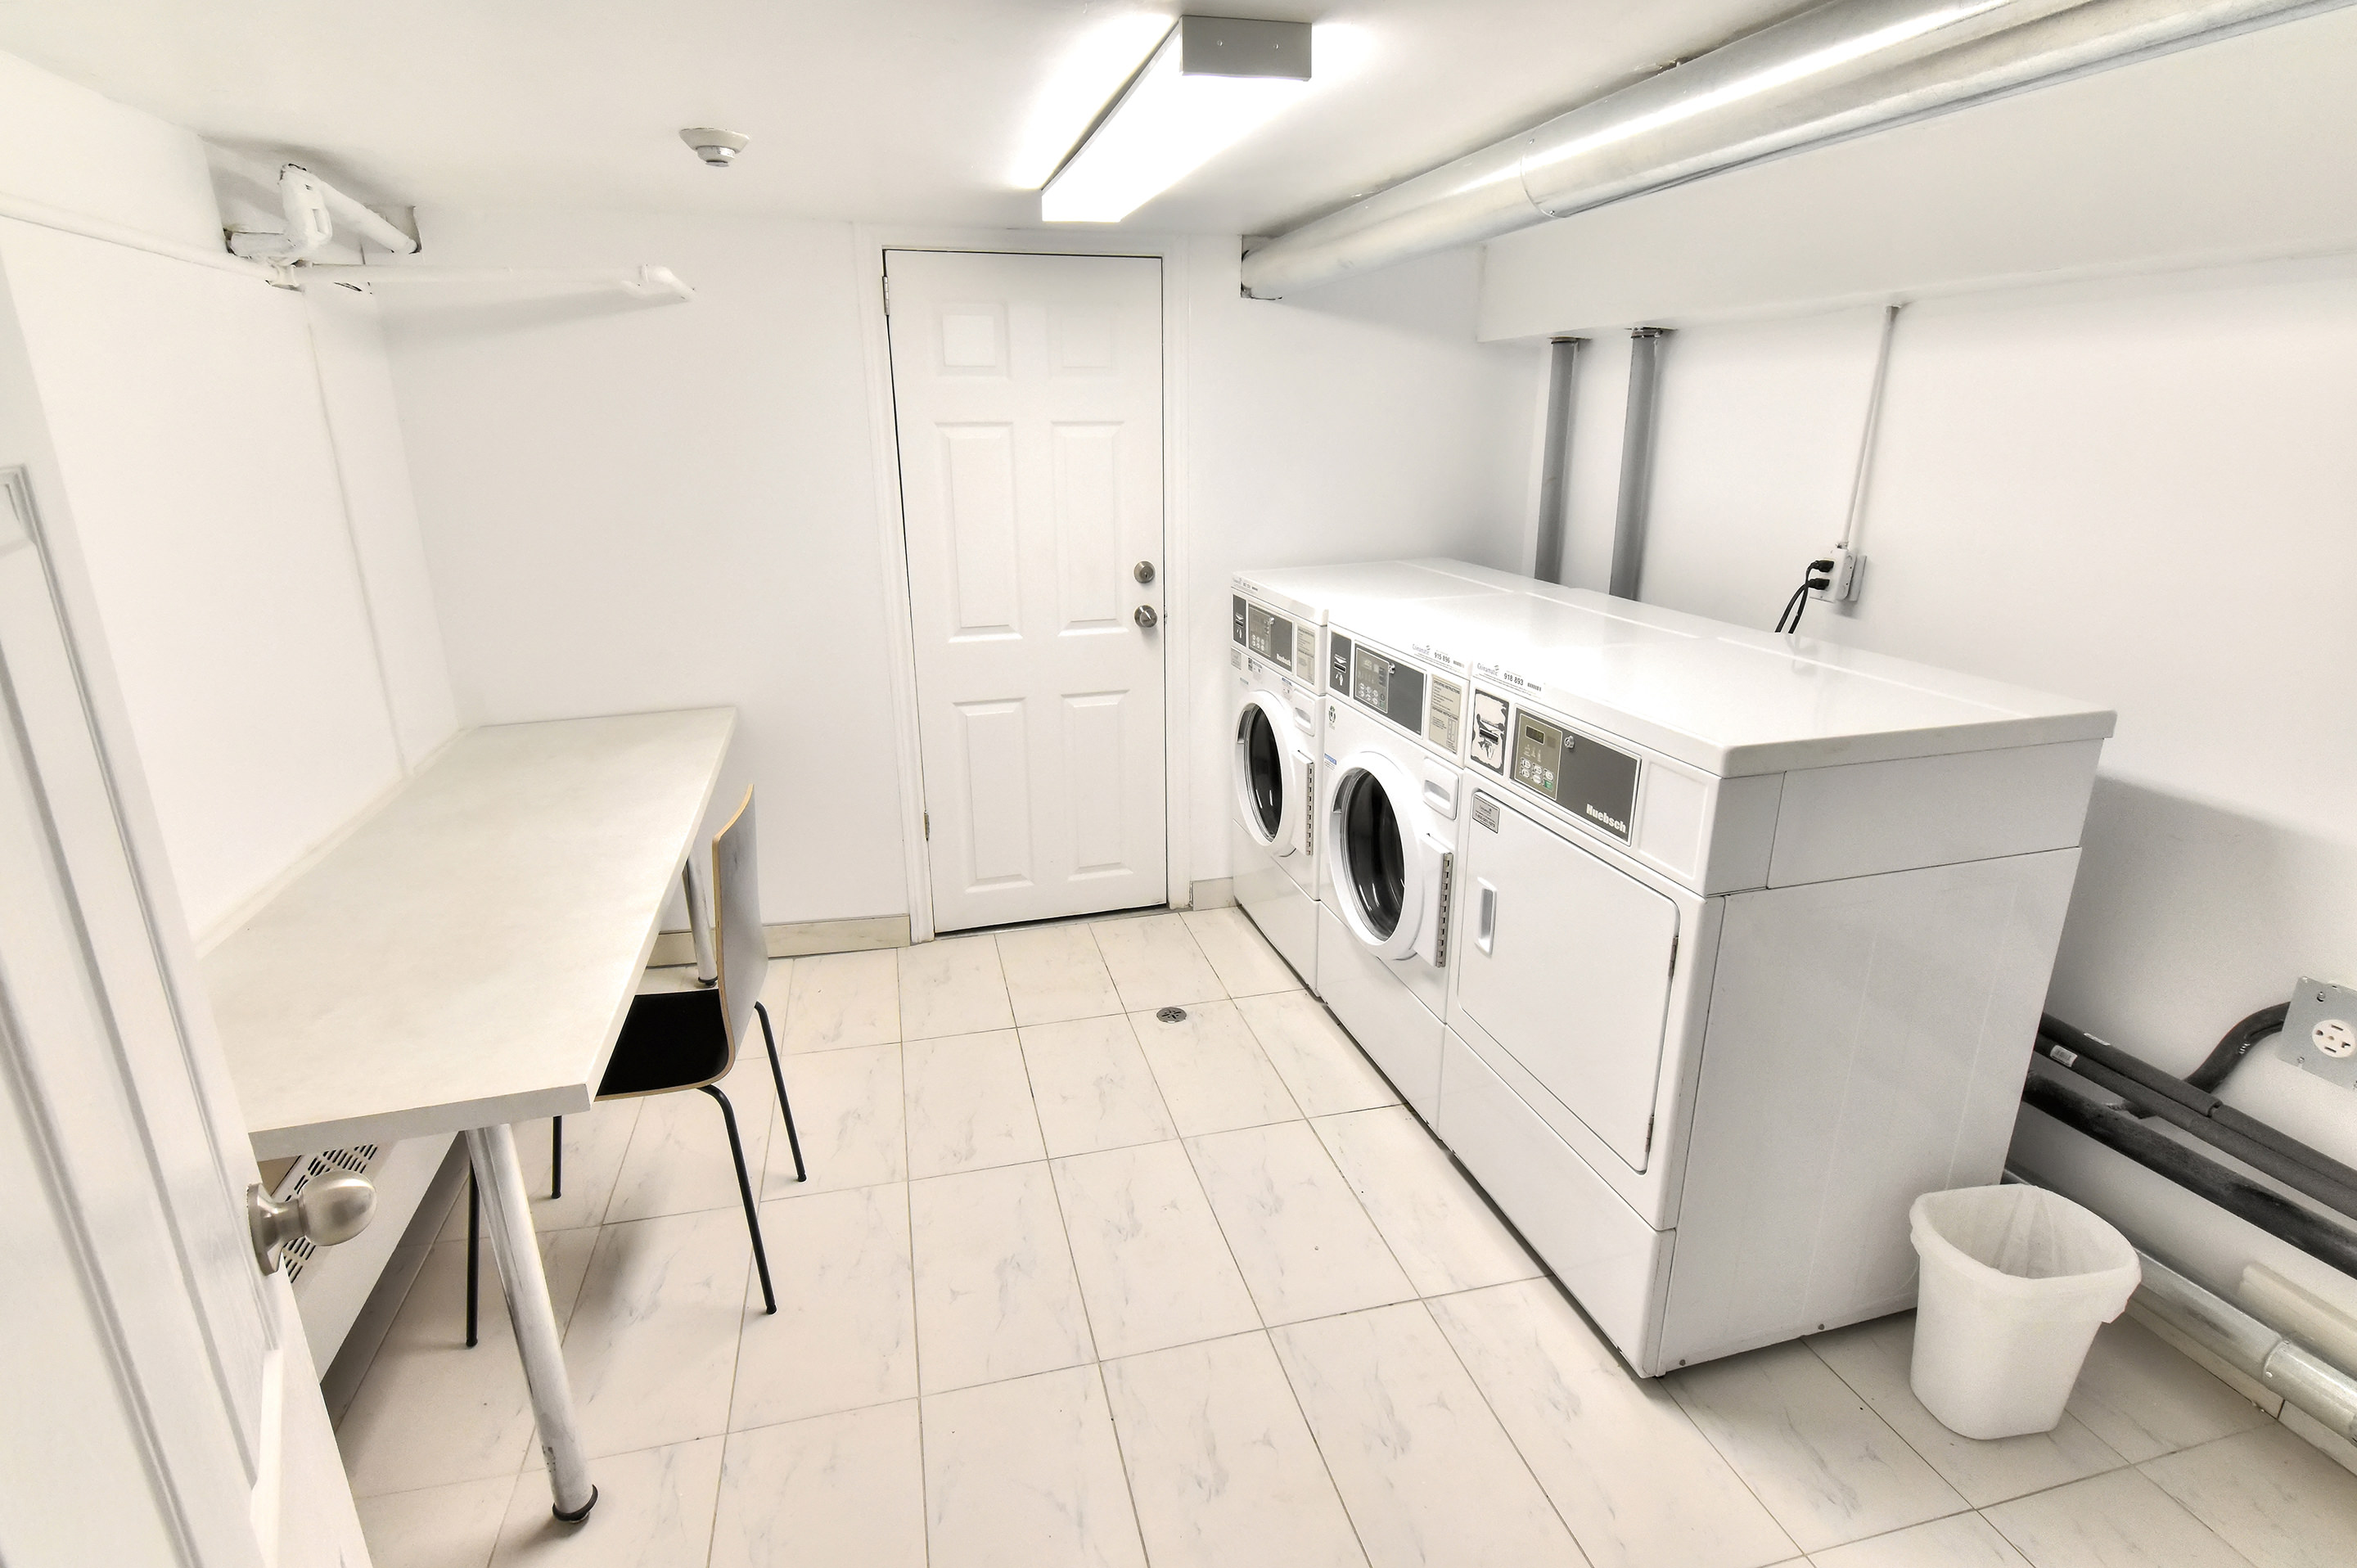 1 bedroom Apartments for rent in Notre-Dame-de-Grace at 2350 Rue Mariette - Photo 11 - RentQuebecApartments – L2278